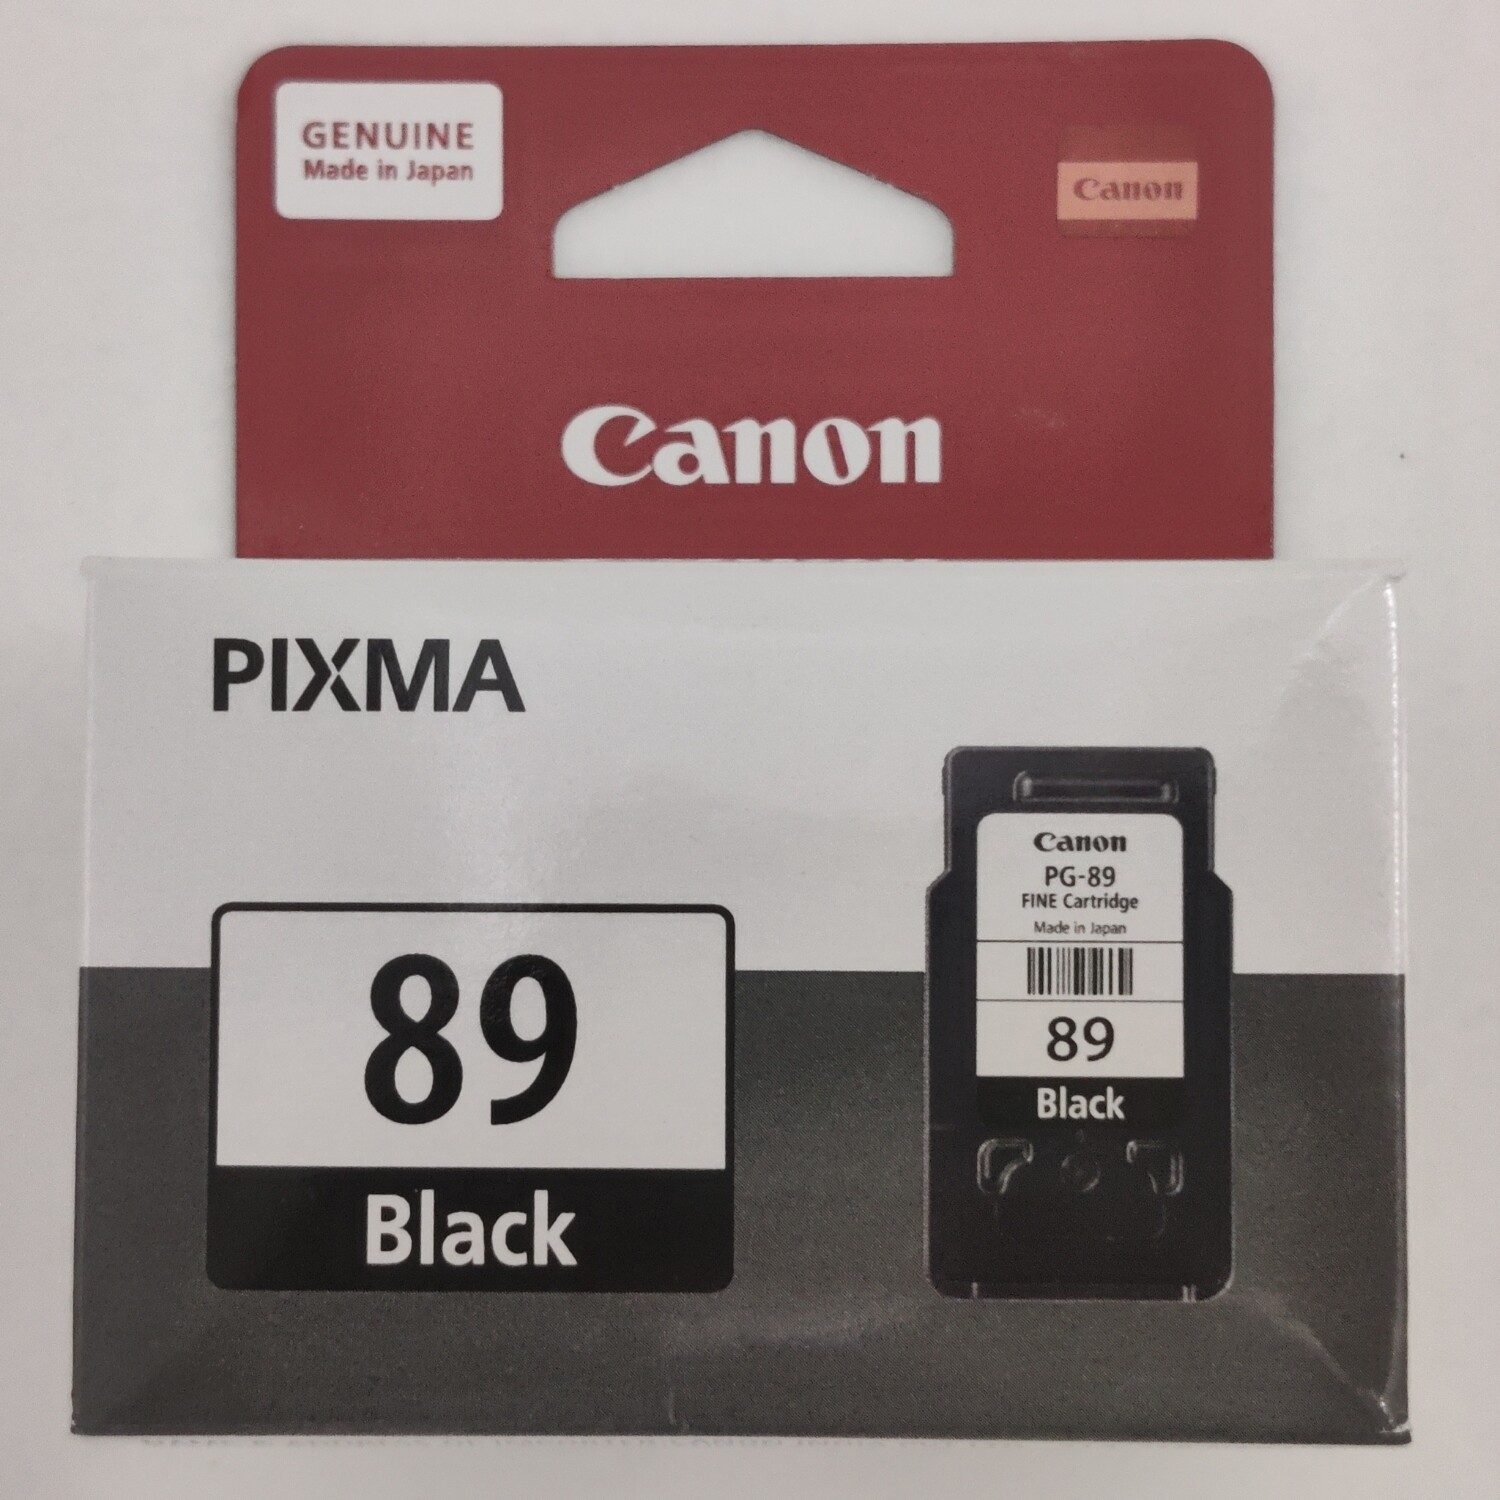 Canon Pixma 89 Ink Cartridge, Black